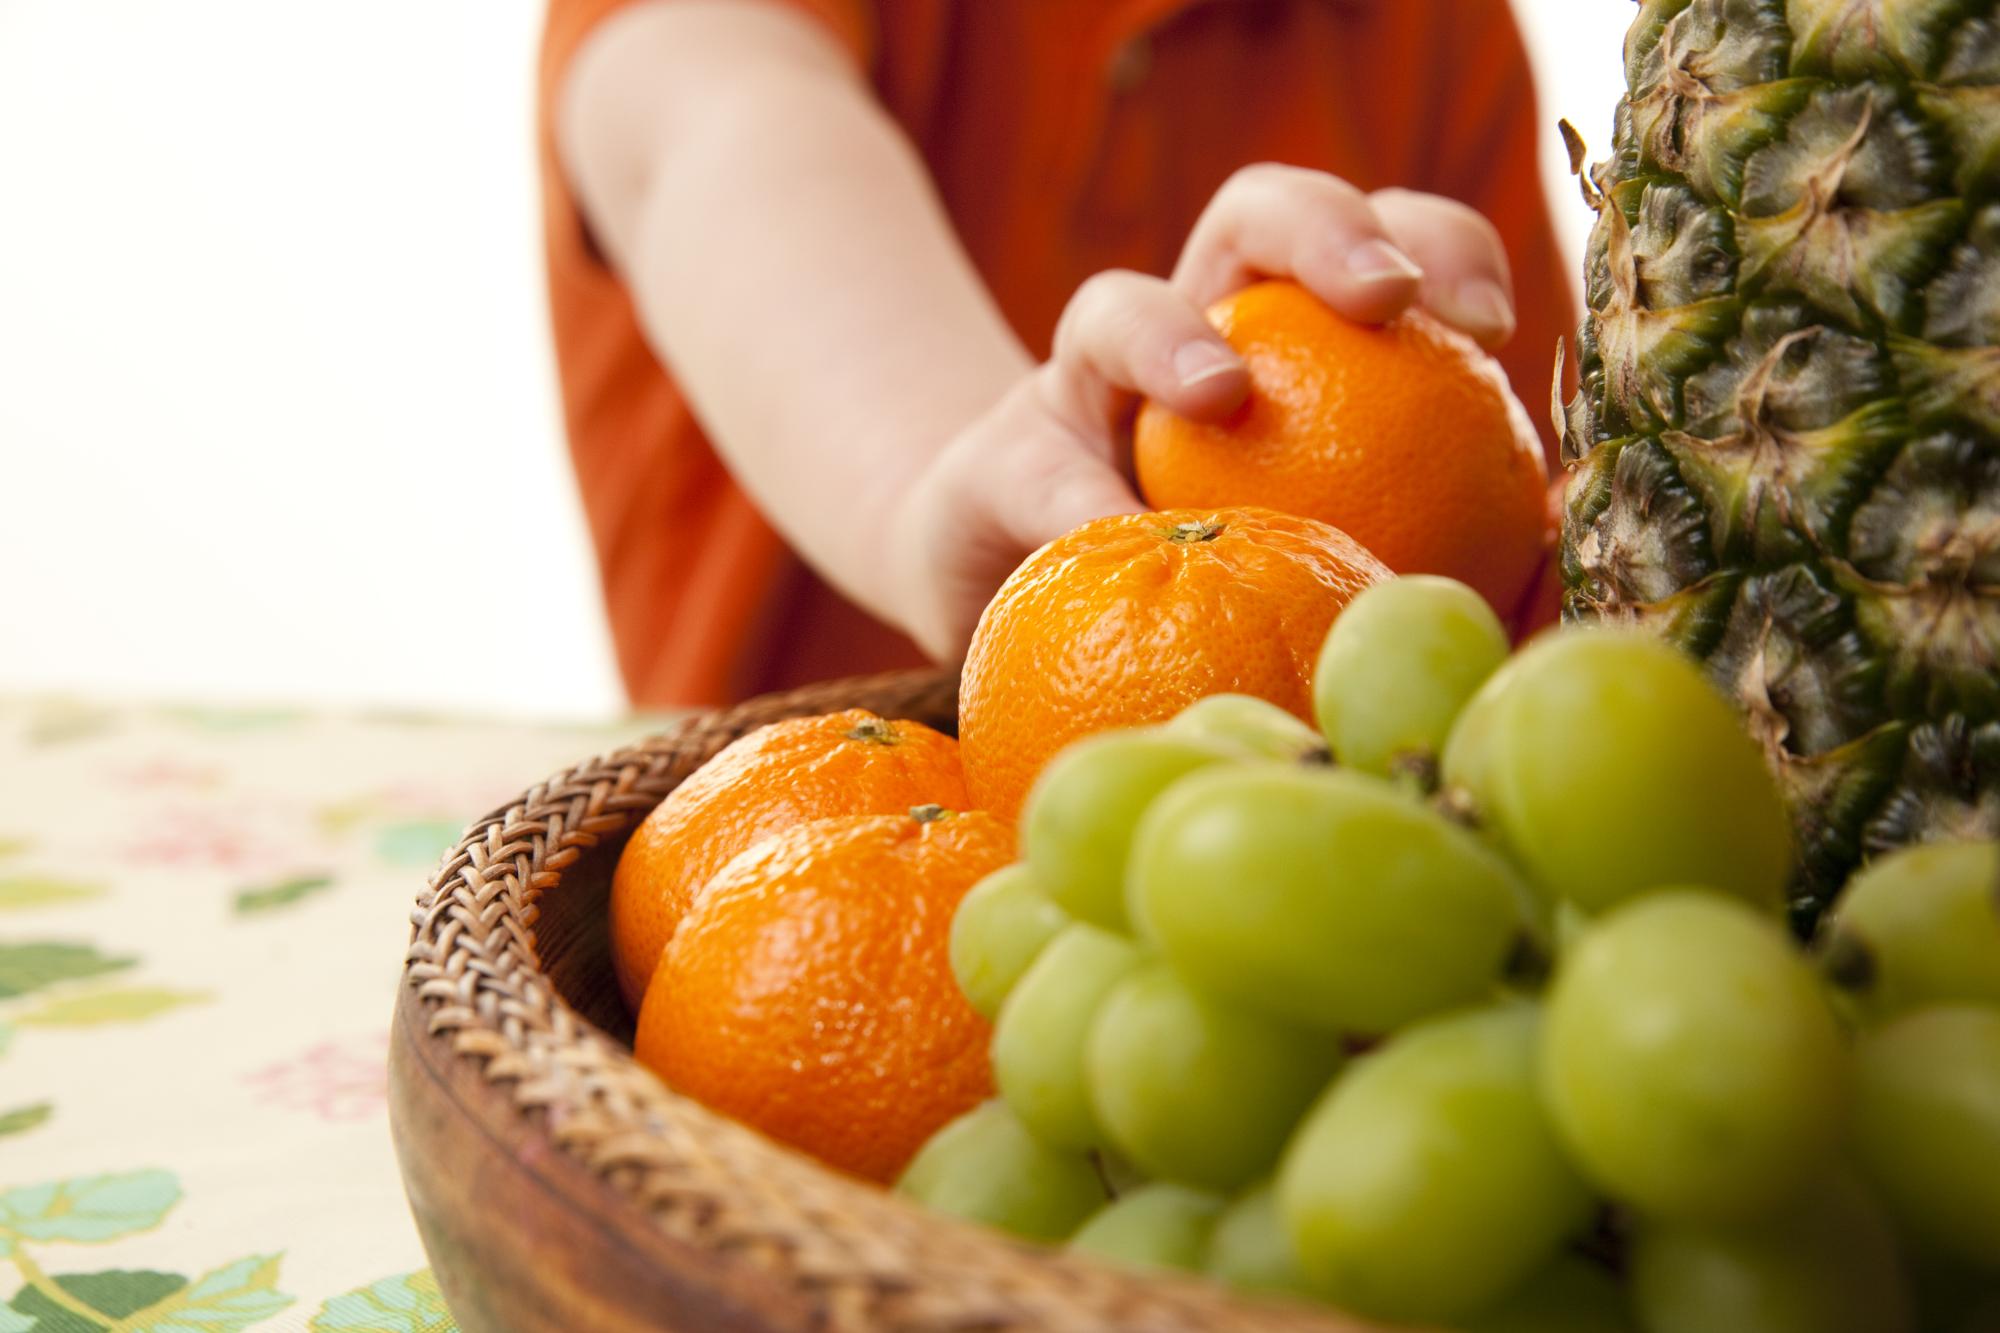 healthy fruit basket